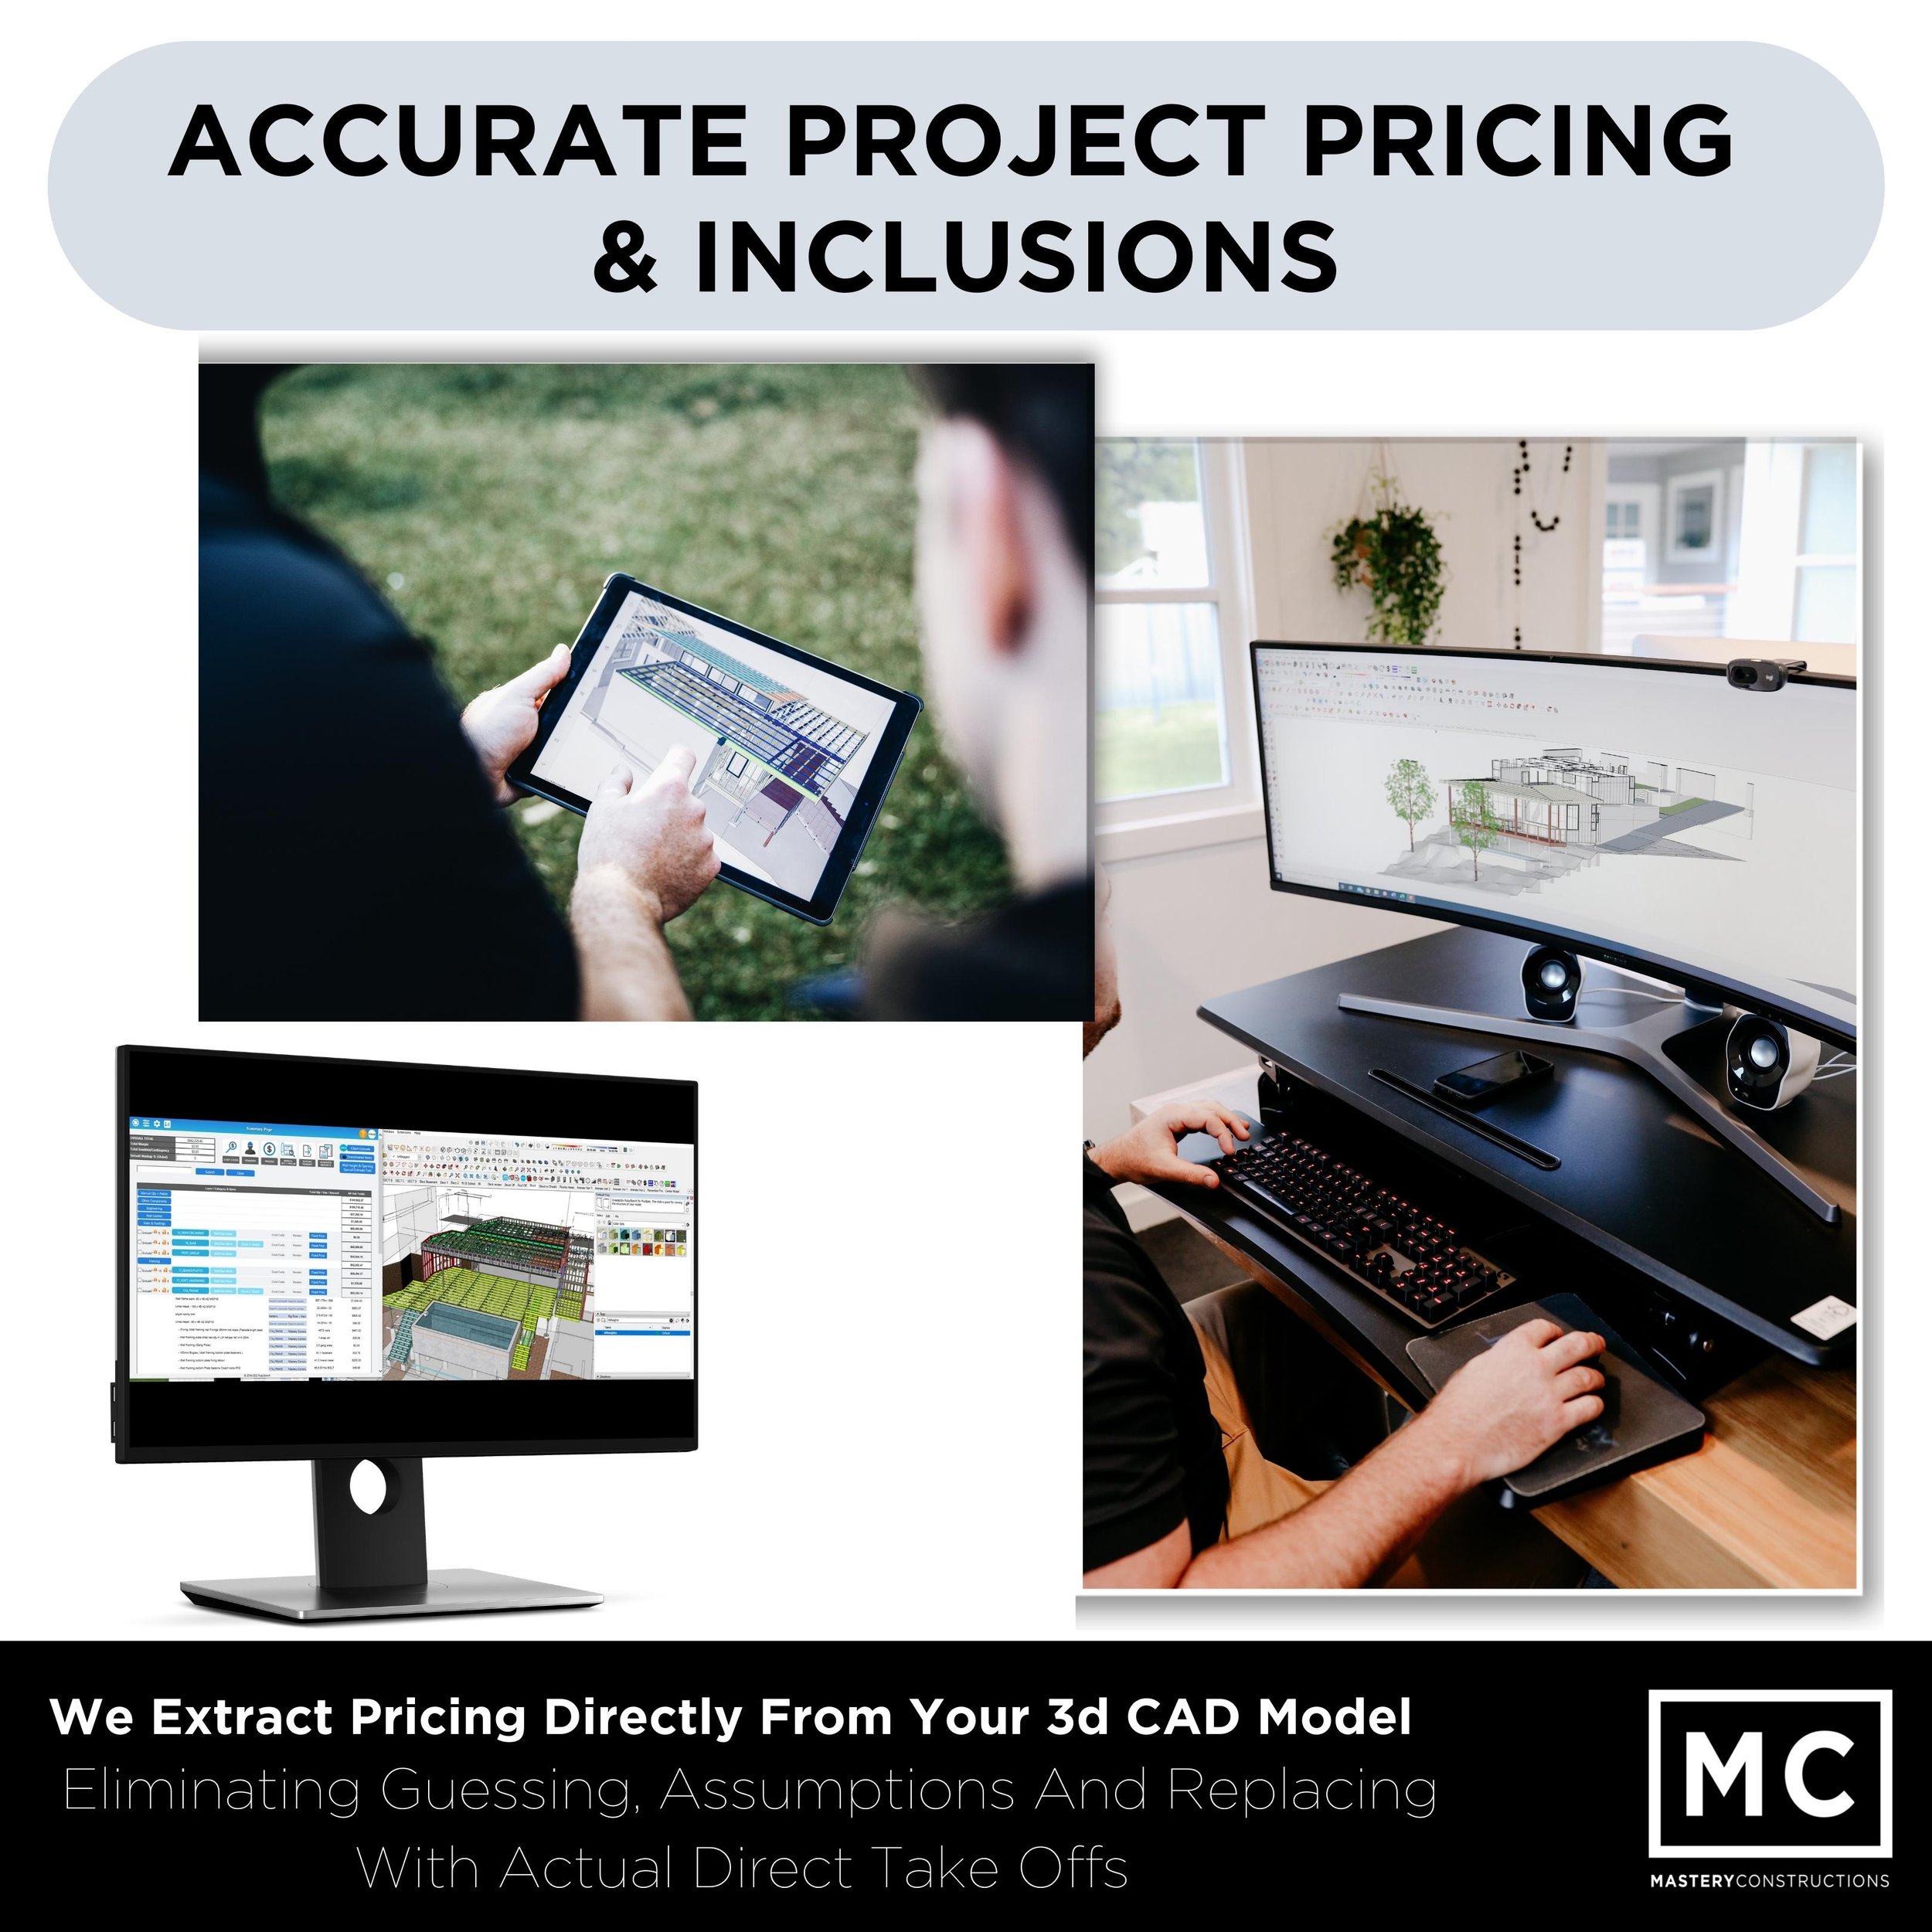 Copy of MC Post - Pricing (9).jpg